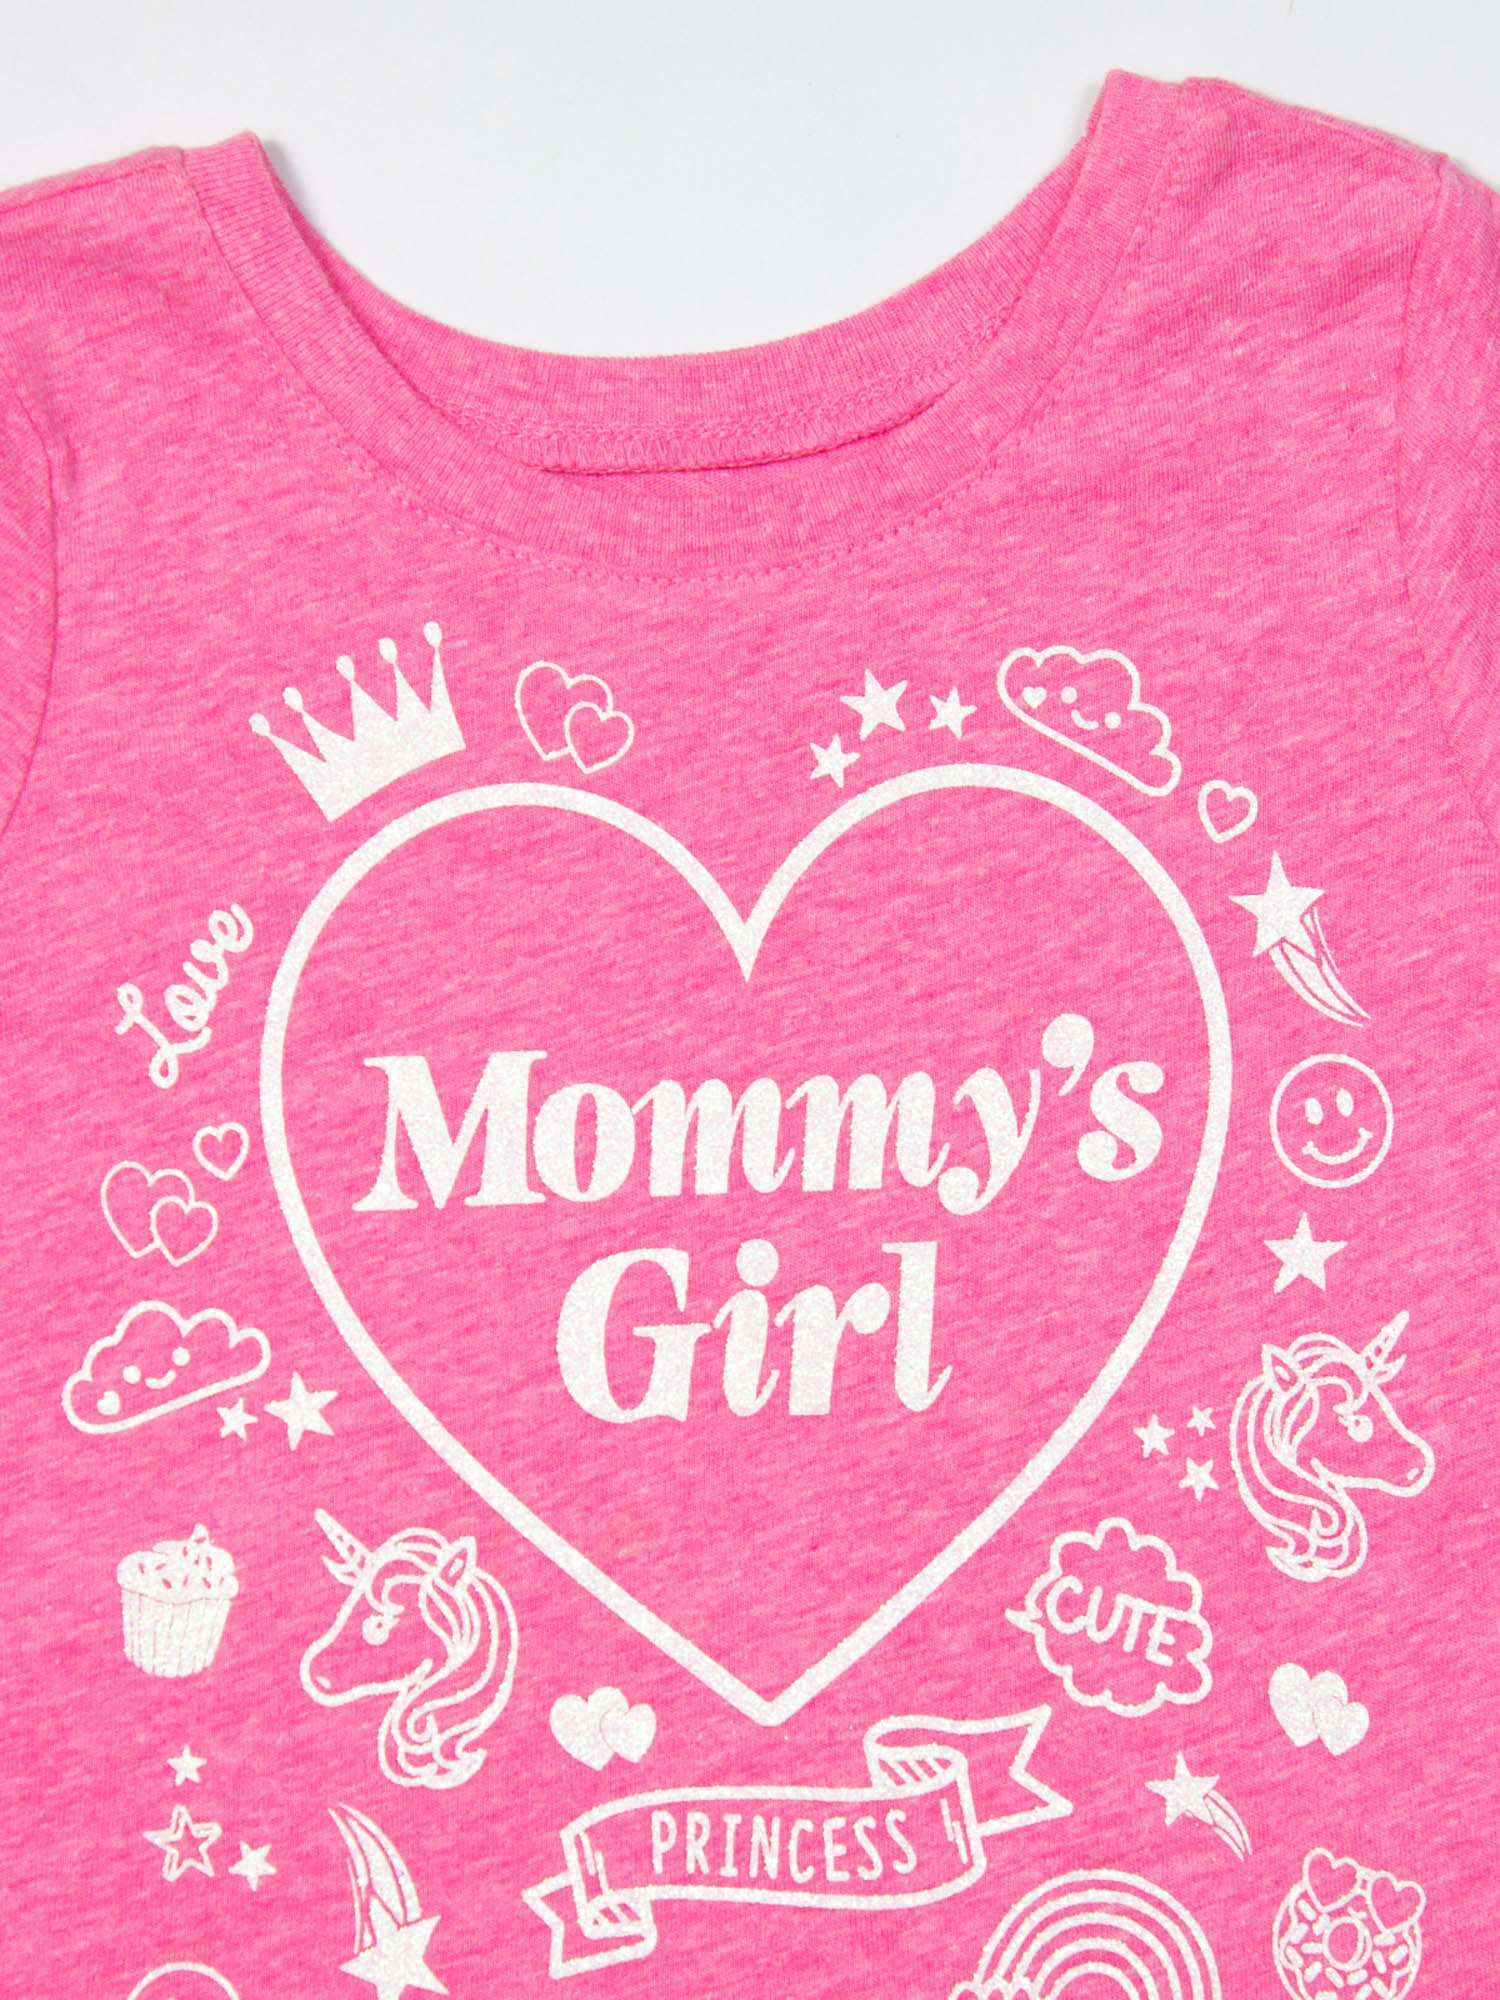 Mom's Girl Shirt